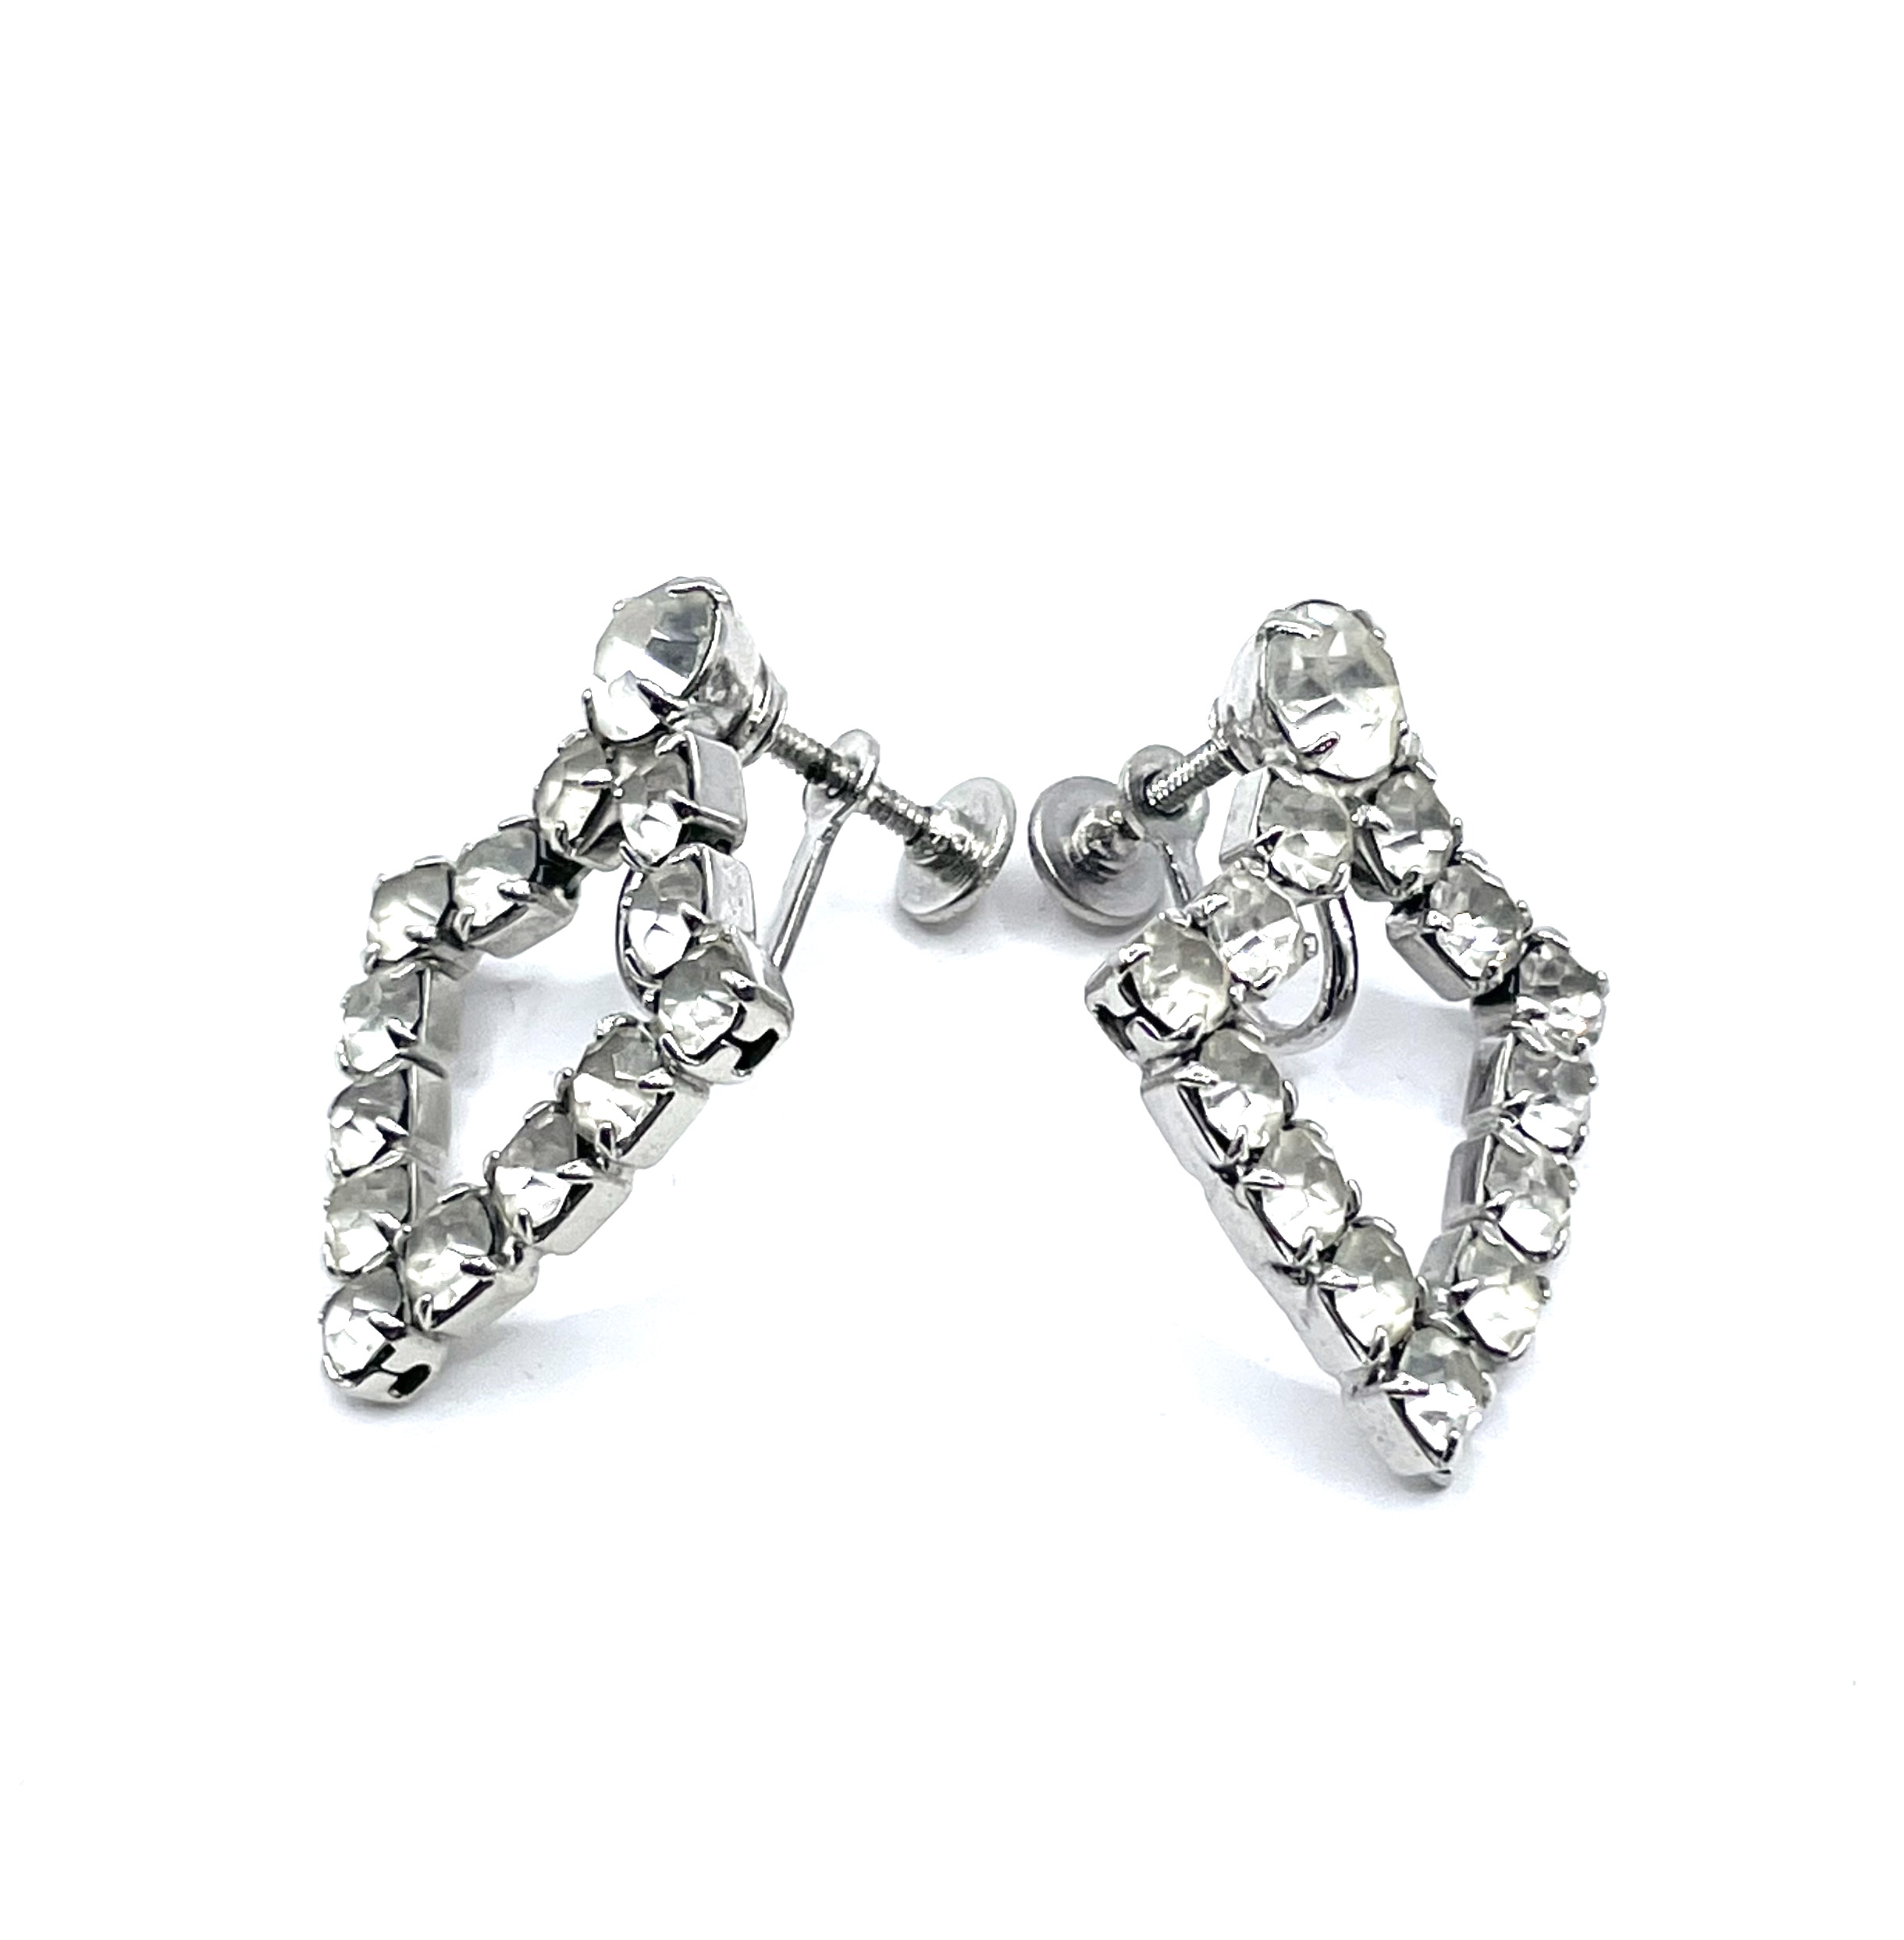 1950s rhinestone earrings